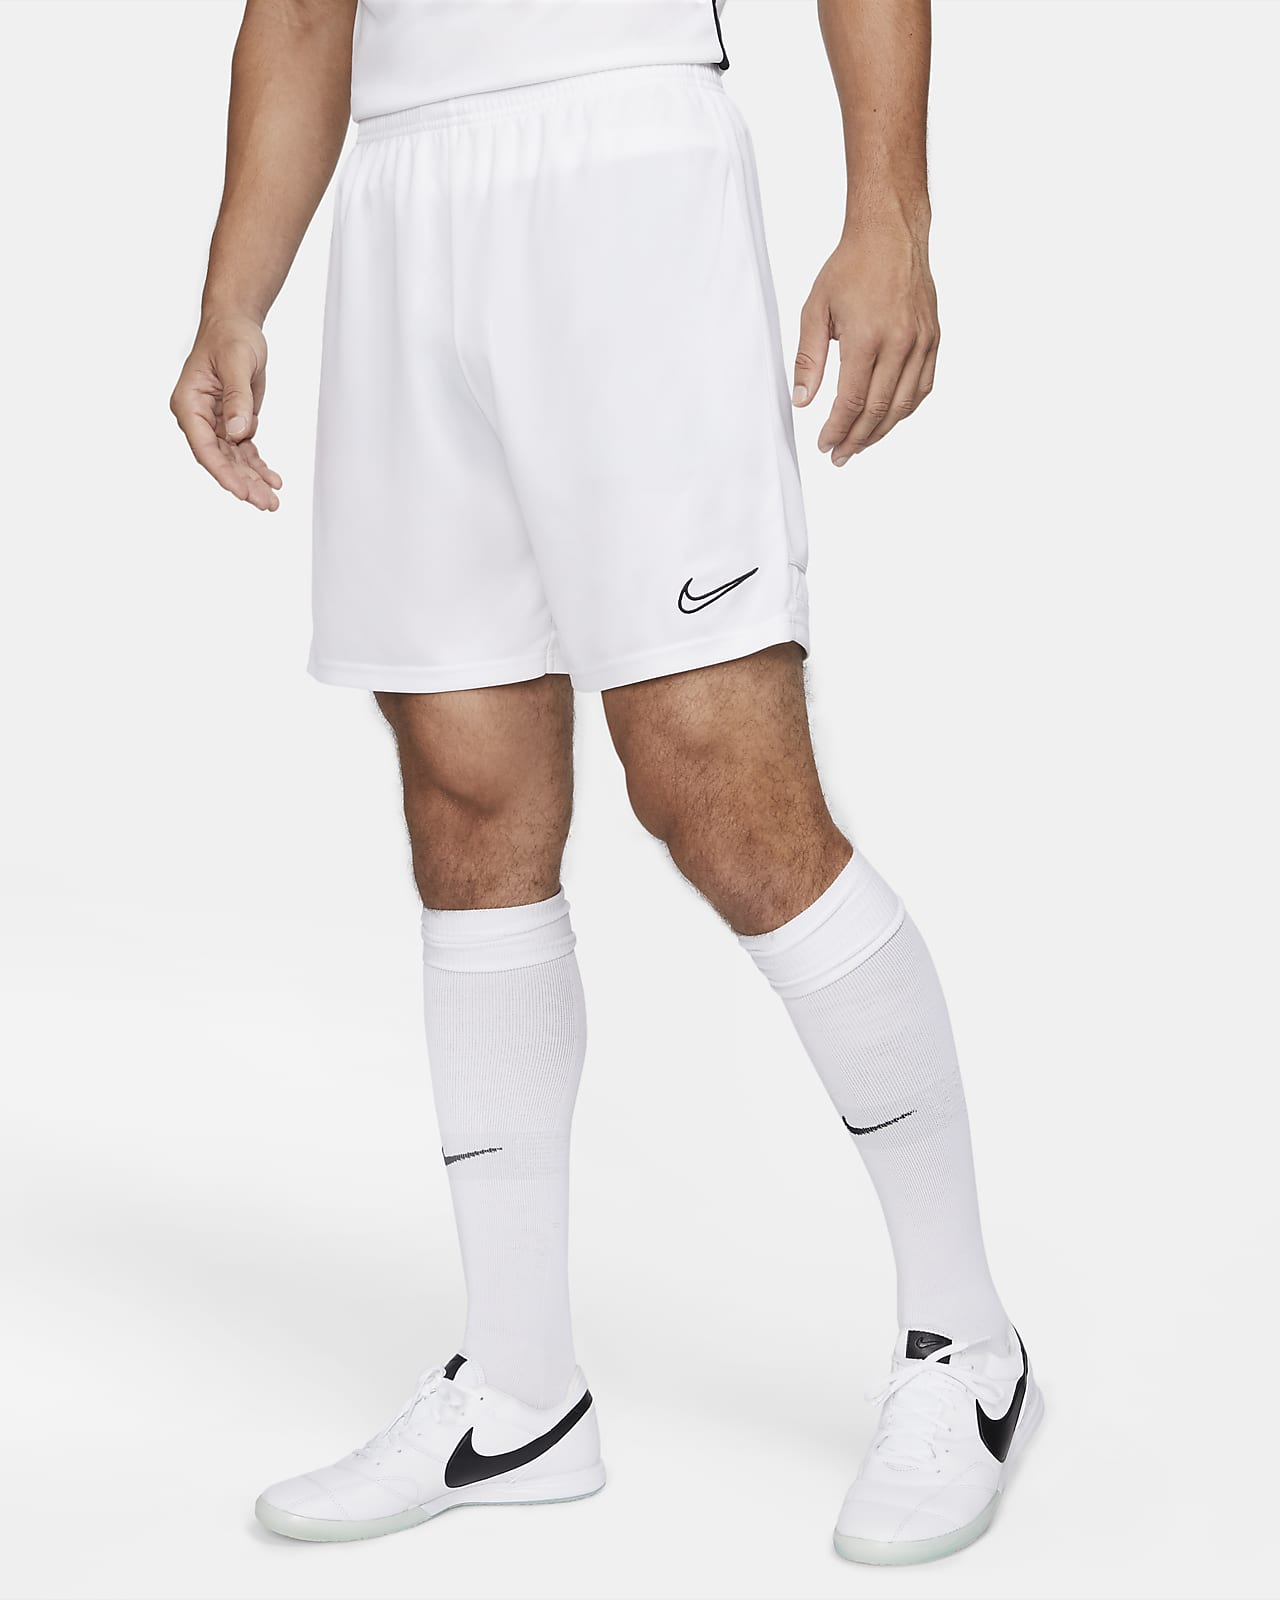 nike fc soccer shorts white